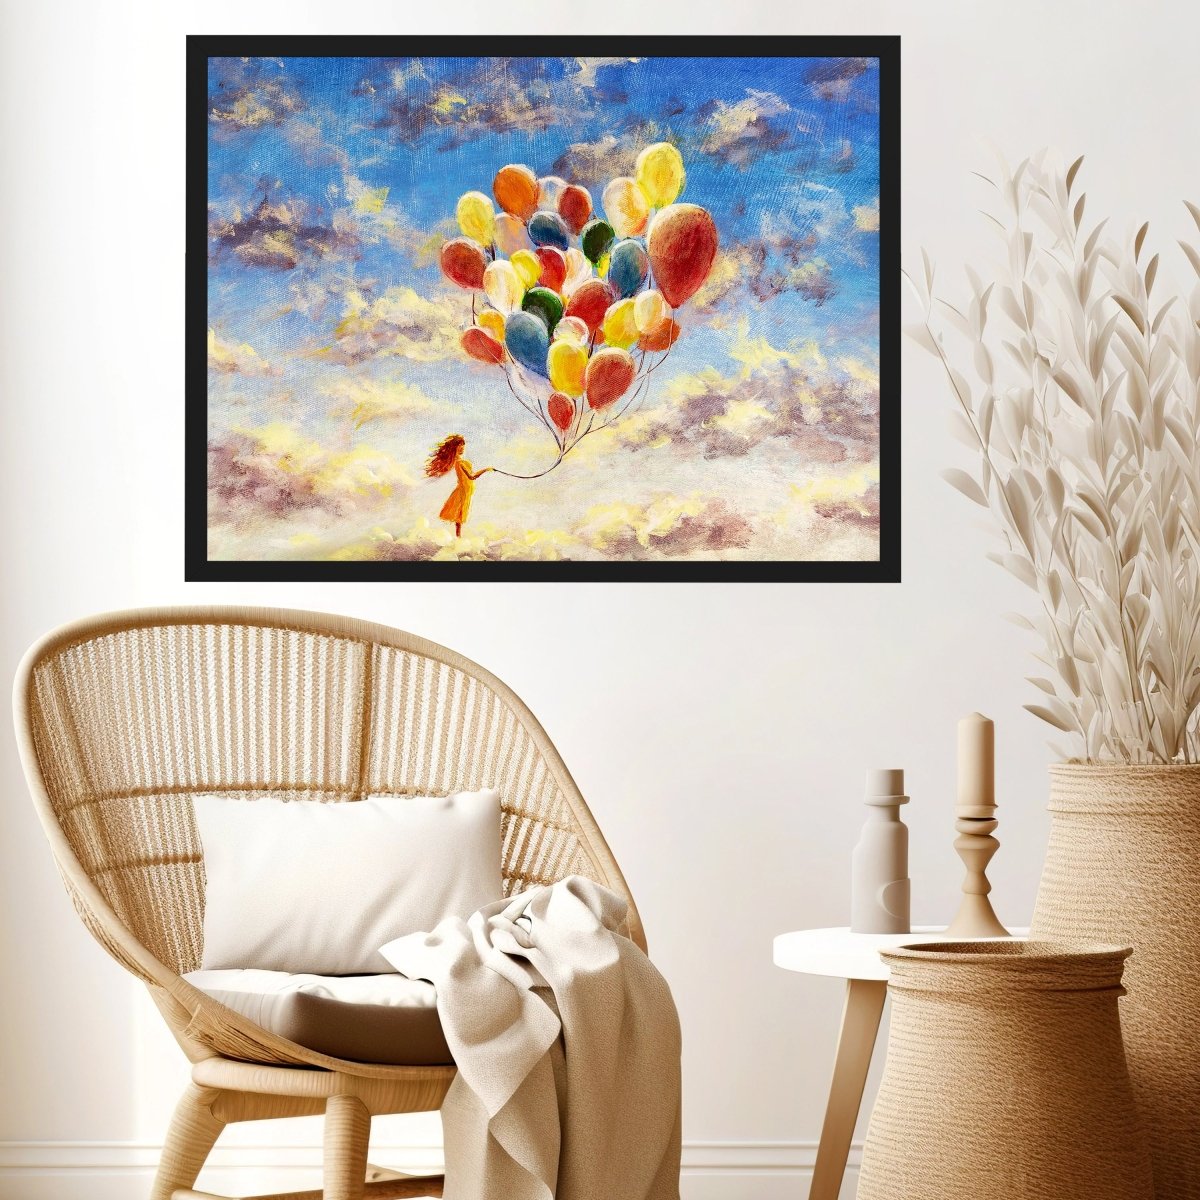 wandmotiv24 Poster, Poster - Gemälde, Malerei, Luftballons - M0236 - Bild 3